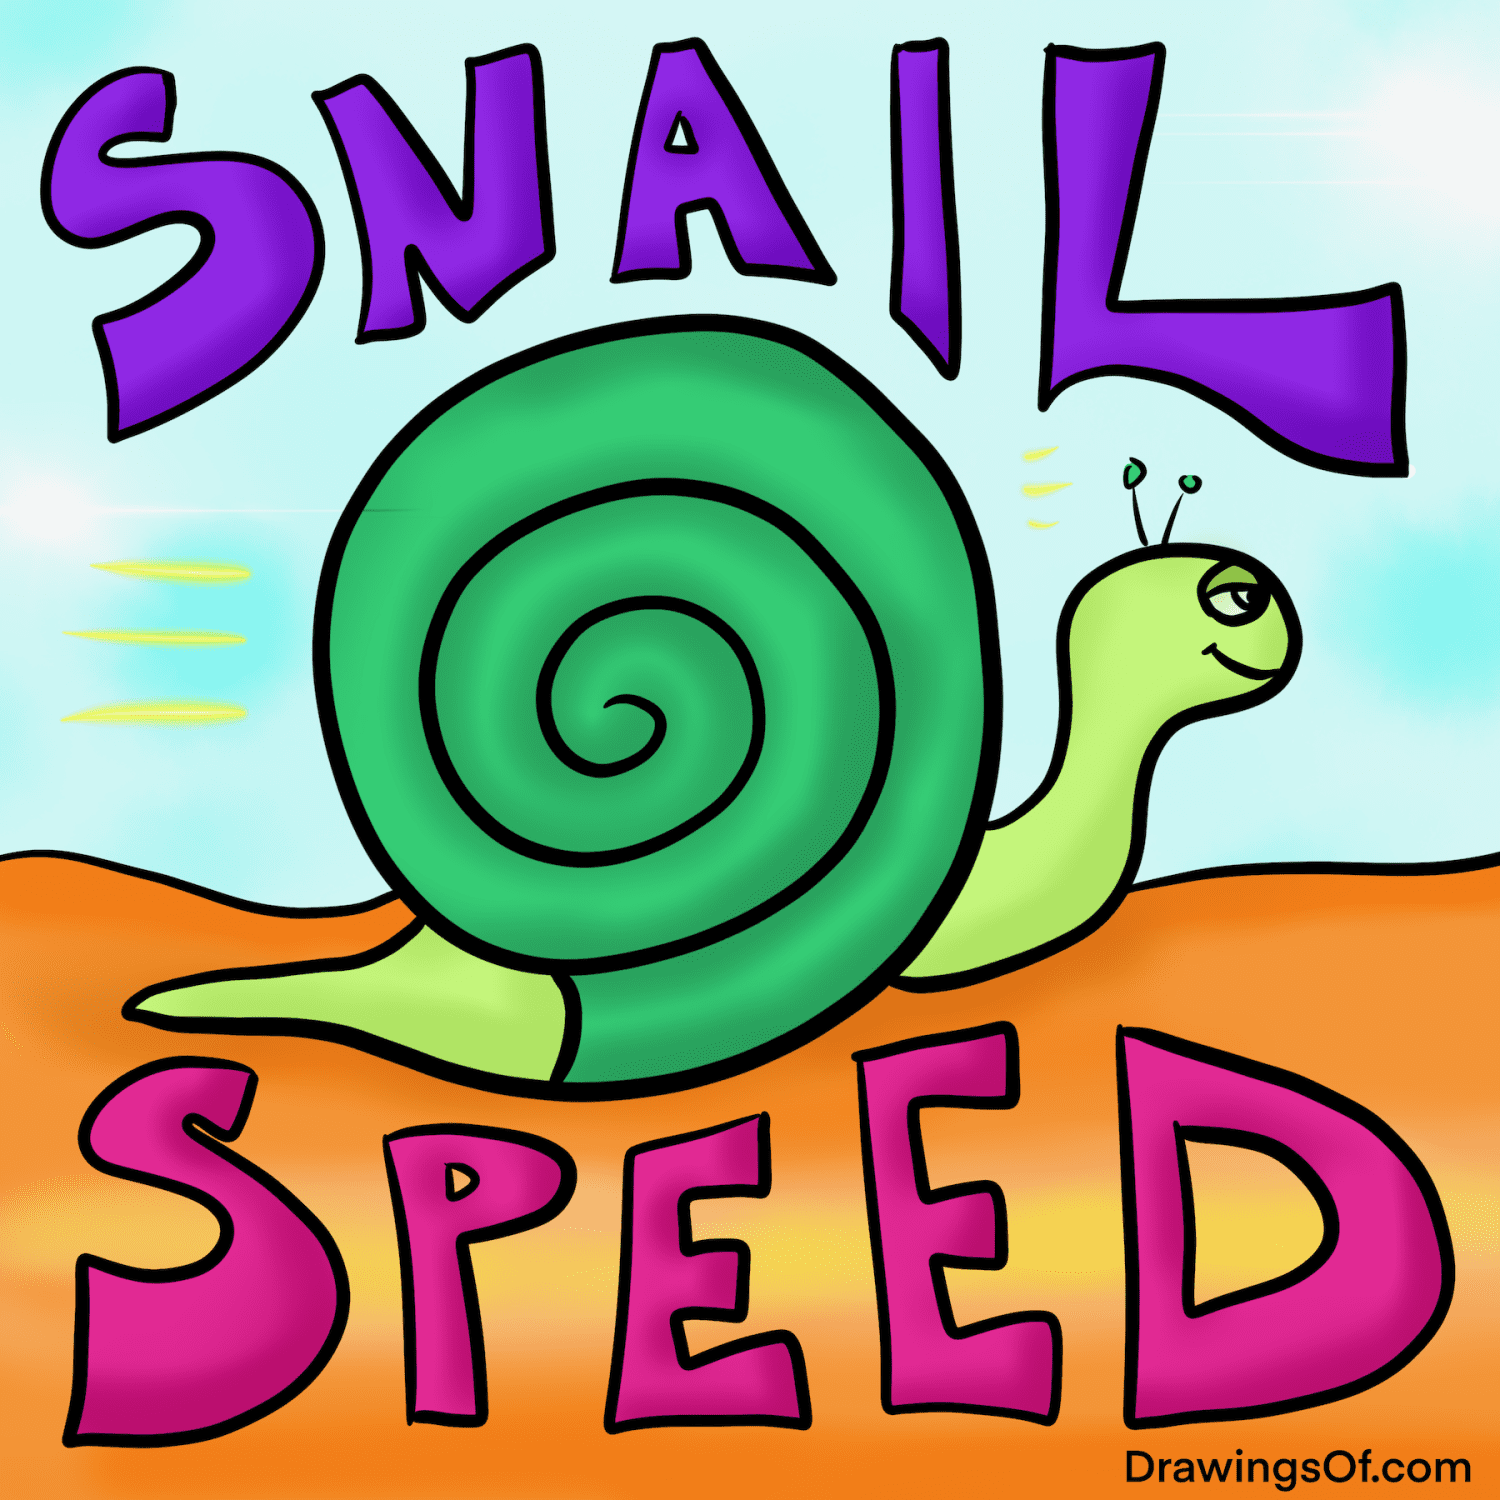 Cute cartoon snail